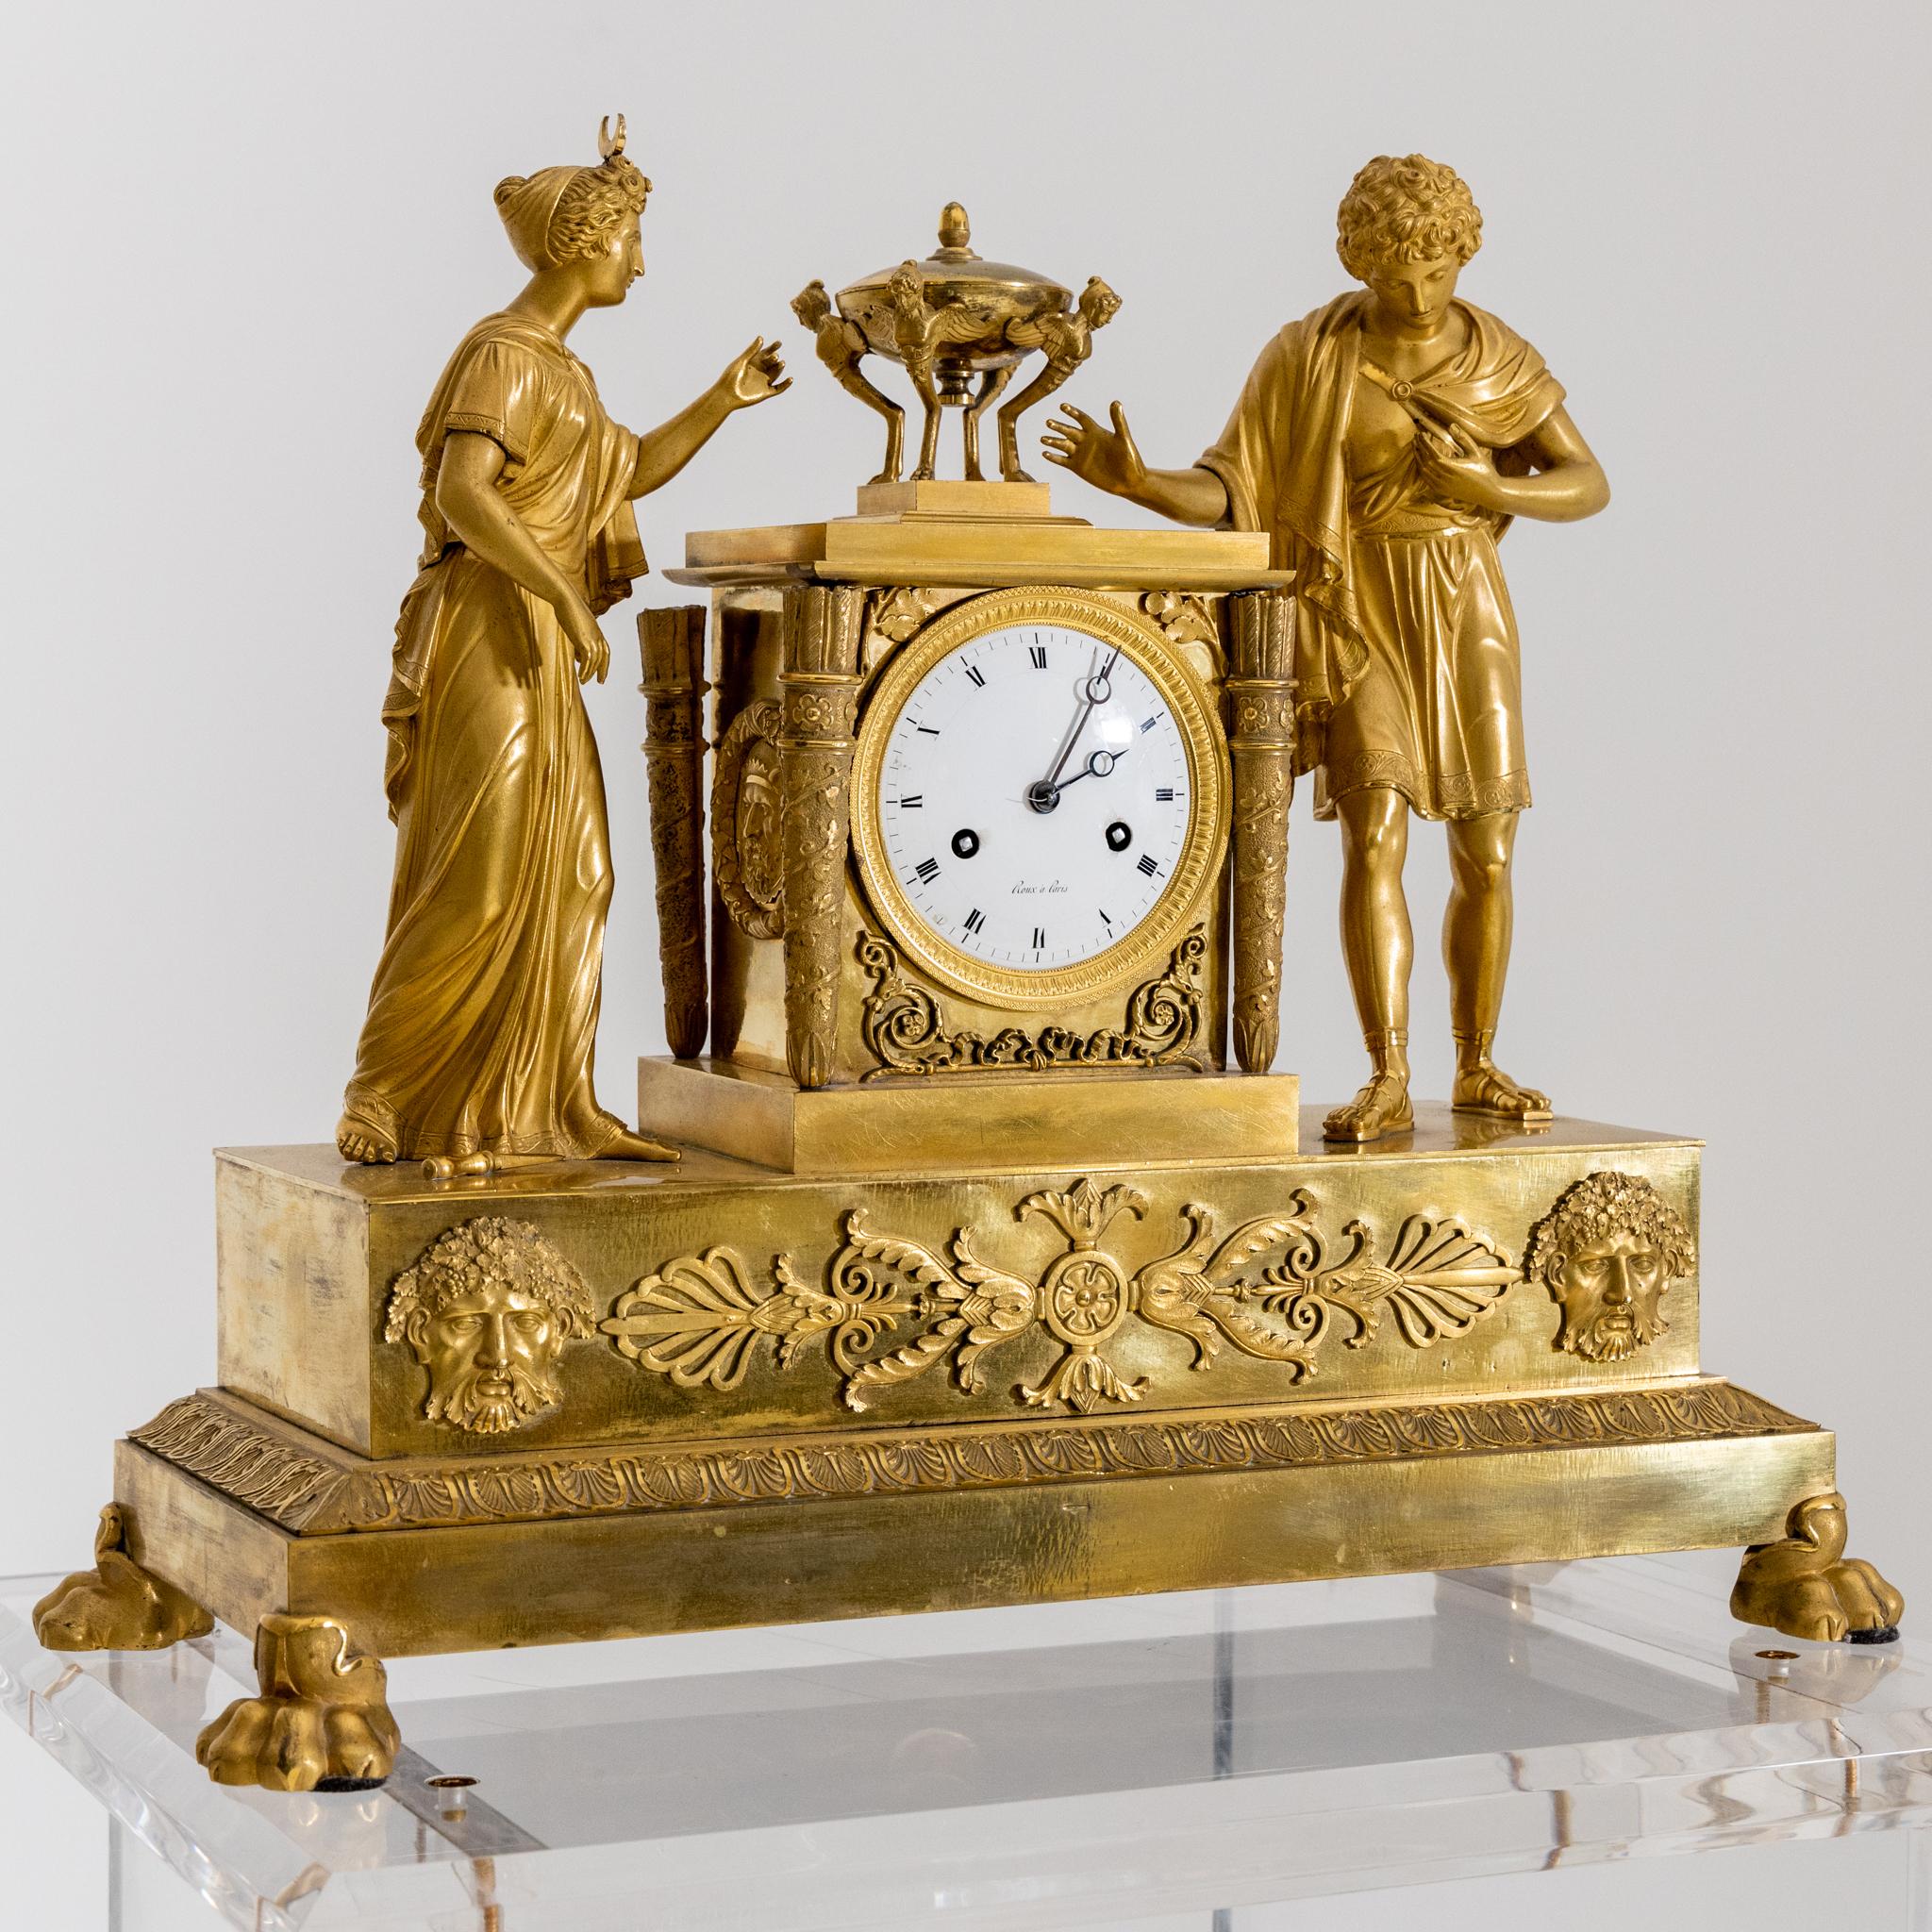 French Empire Mantel Clock, Roux à Paris, Early 19th Century